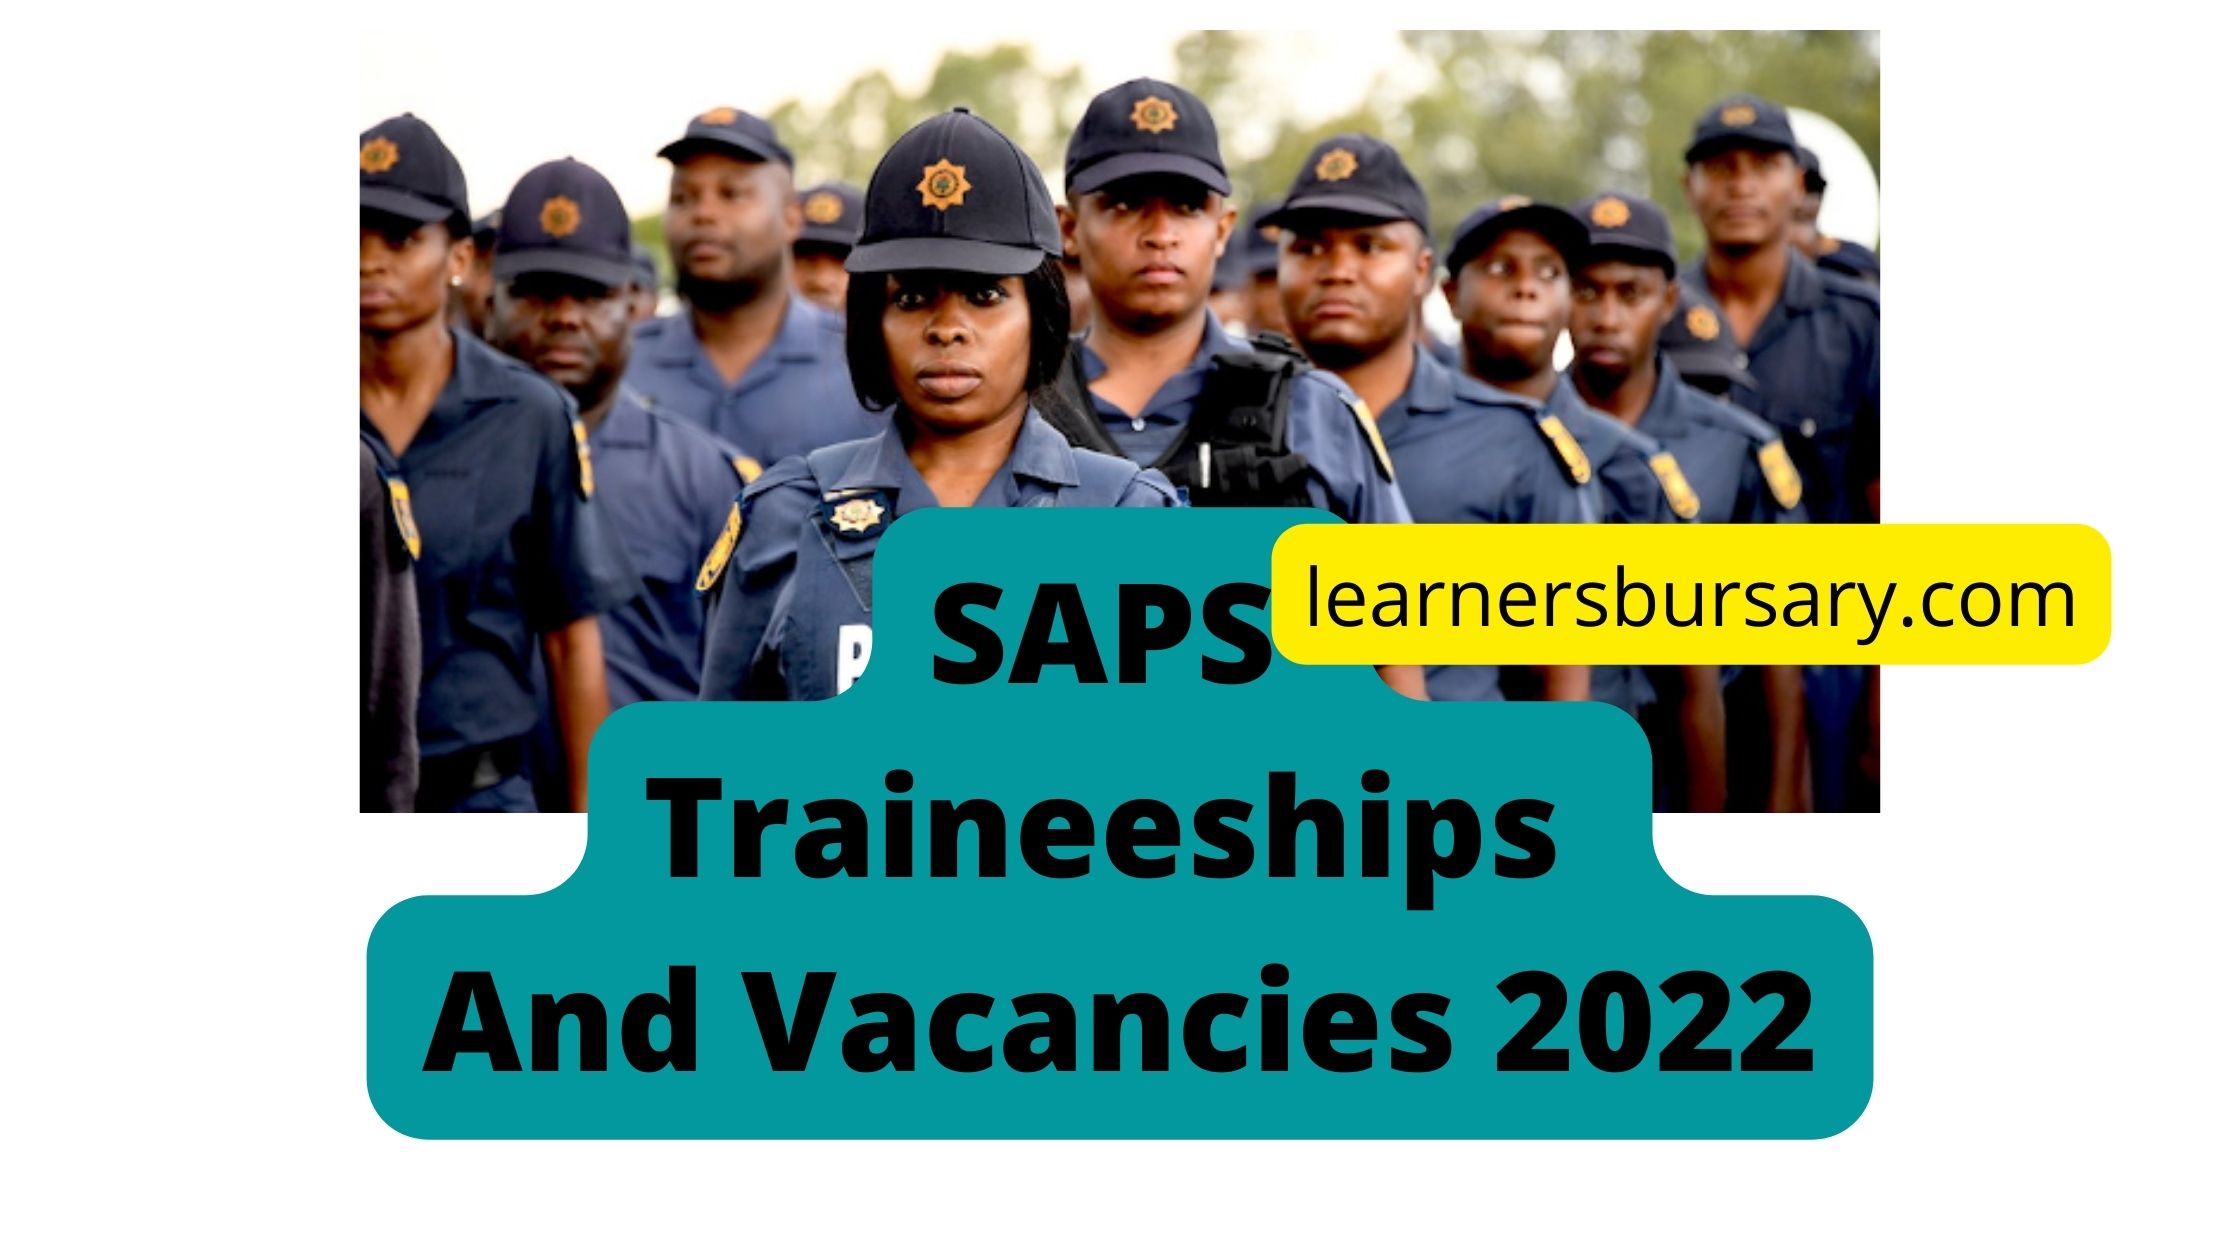 SAPS Traineeships And Vacancies 2022